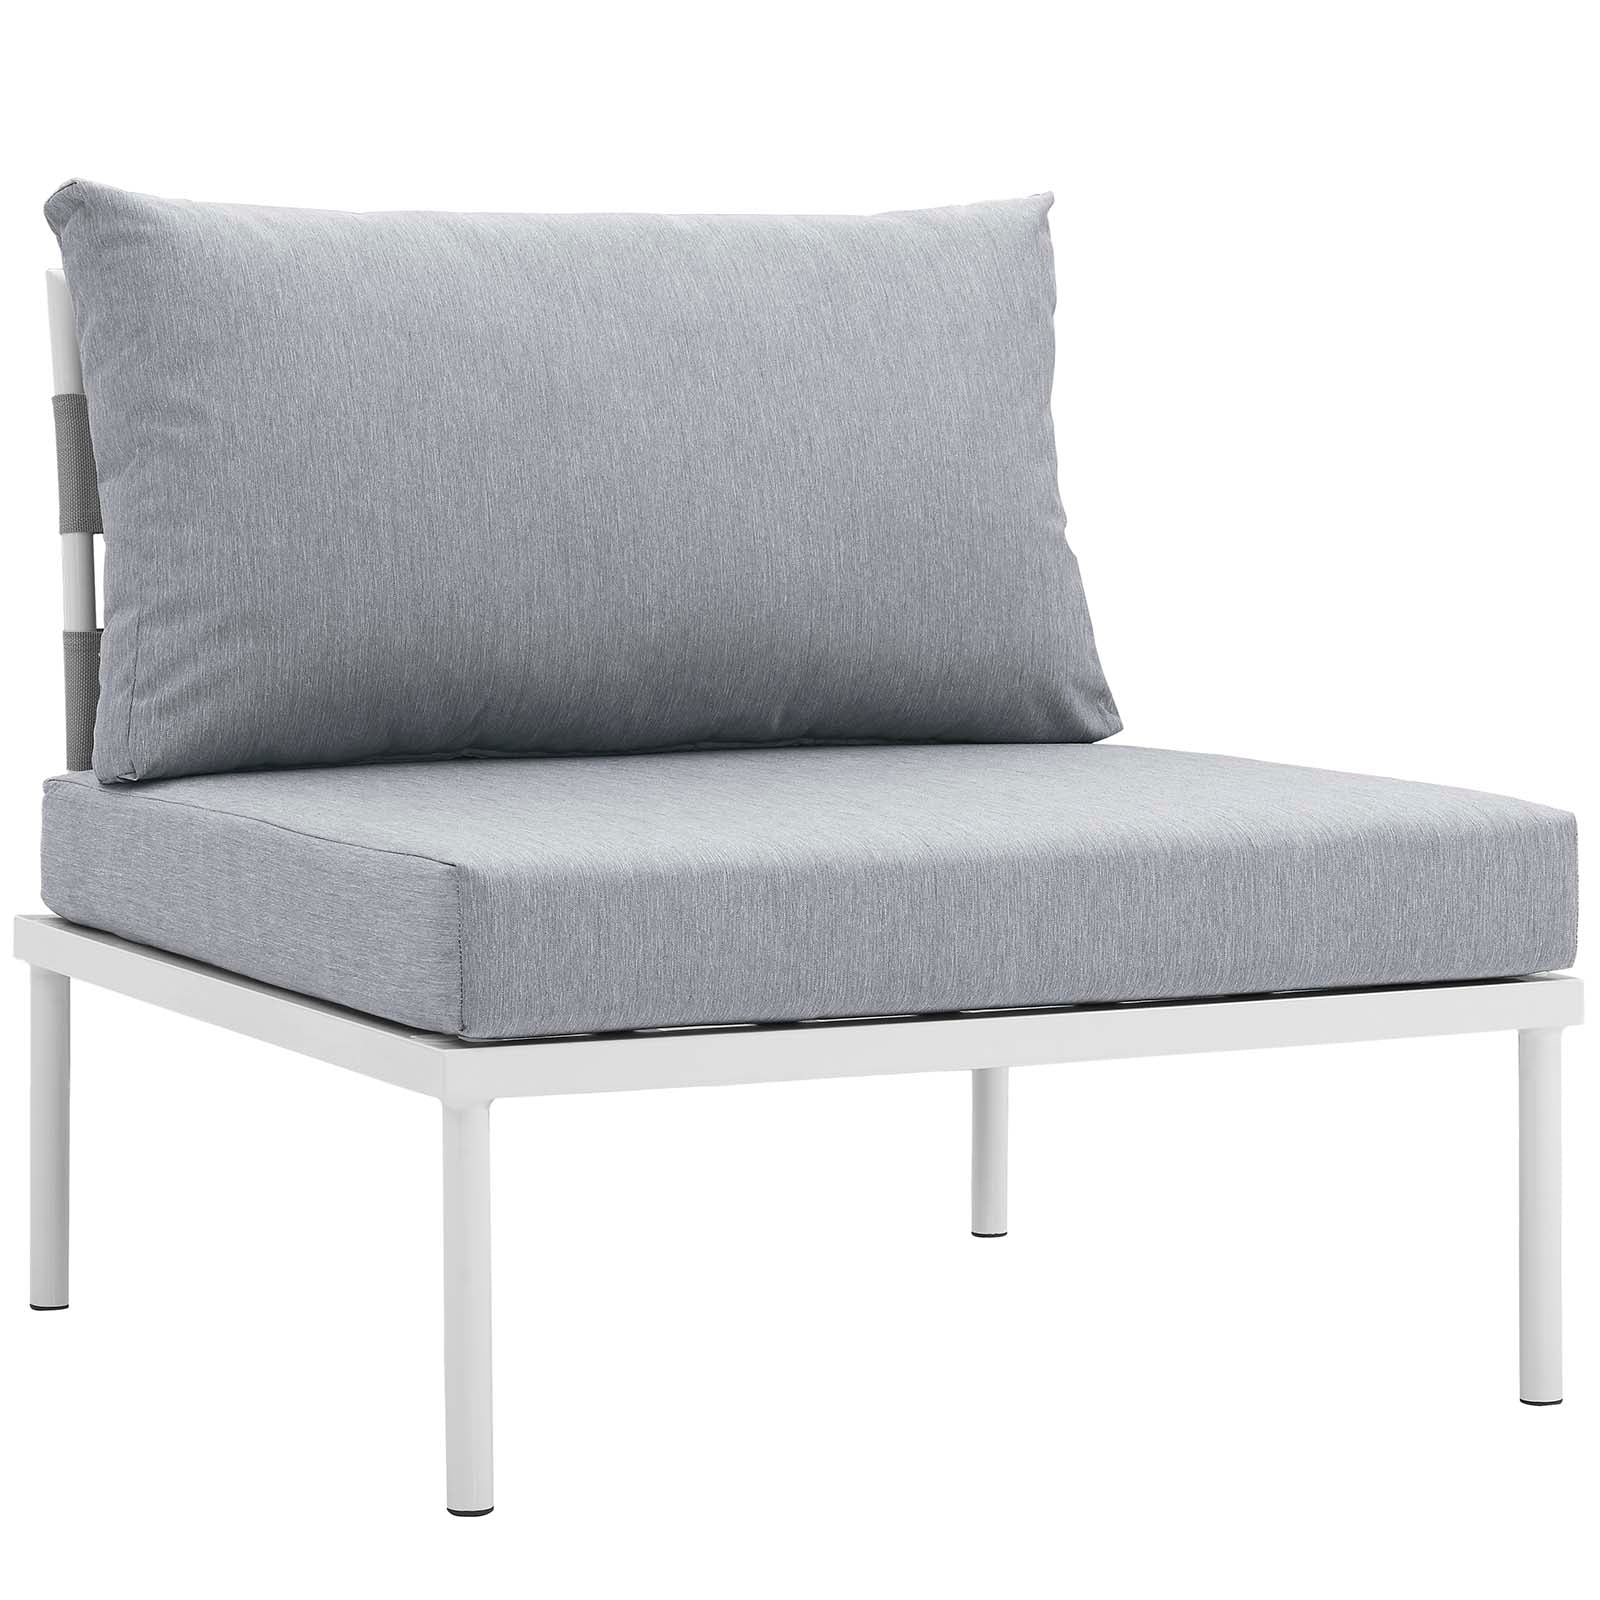 Modway Outdoor Conversation Sets - Harmony 132" 7 Piece Outdoor Patio Aluminum Sectional Sofa Set White Gray